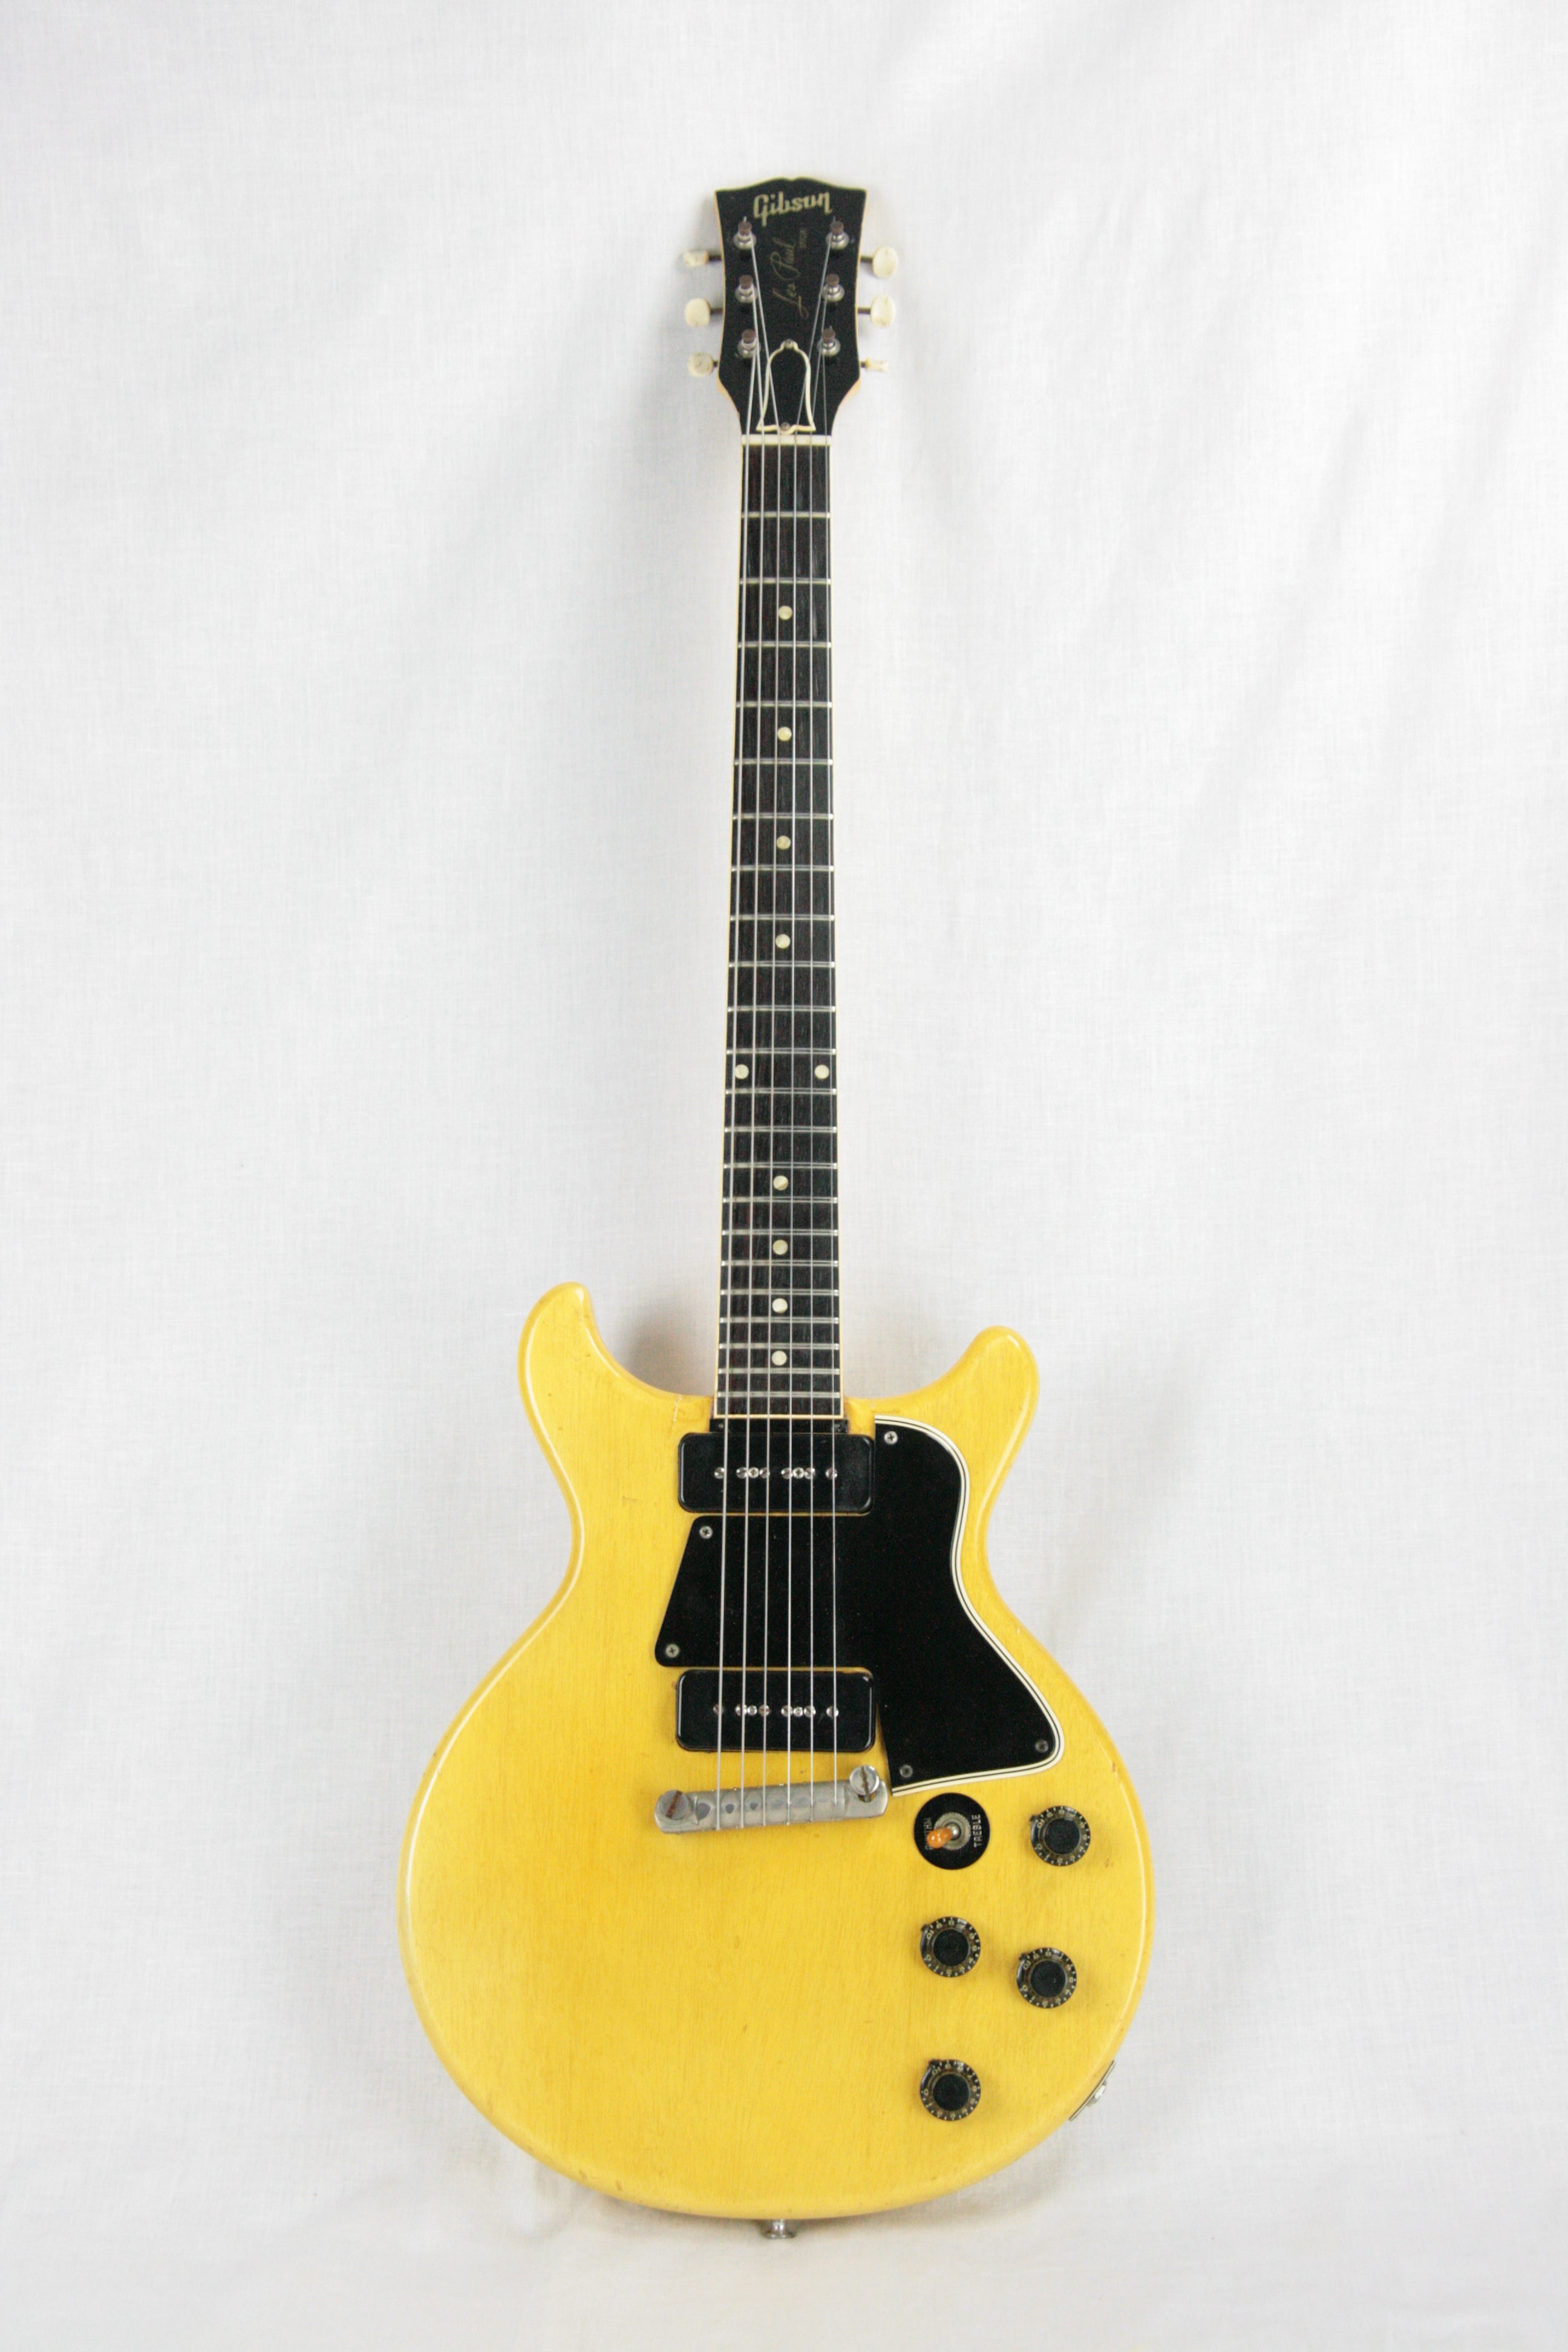 *SOLD*  1959 Gibson Les Paul TV Yellow Special! Doublecut, Double Cutaway 1950's LP! P90's Jr.